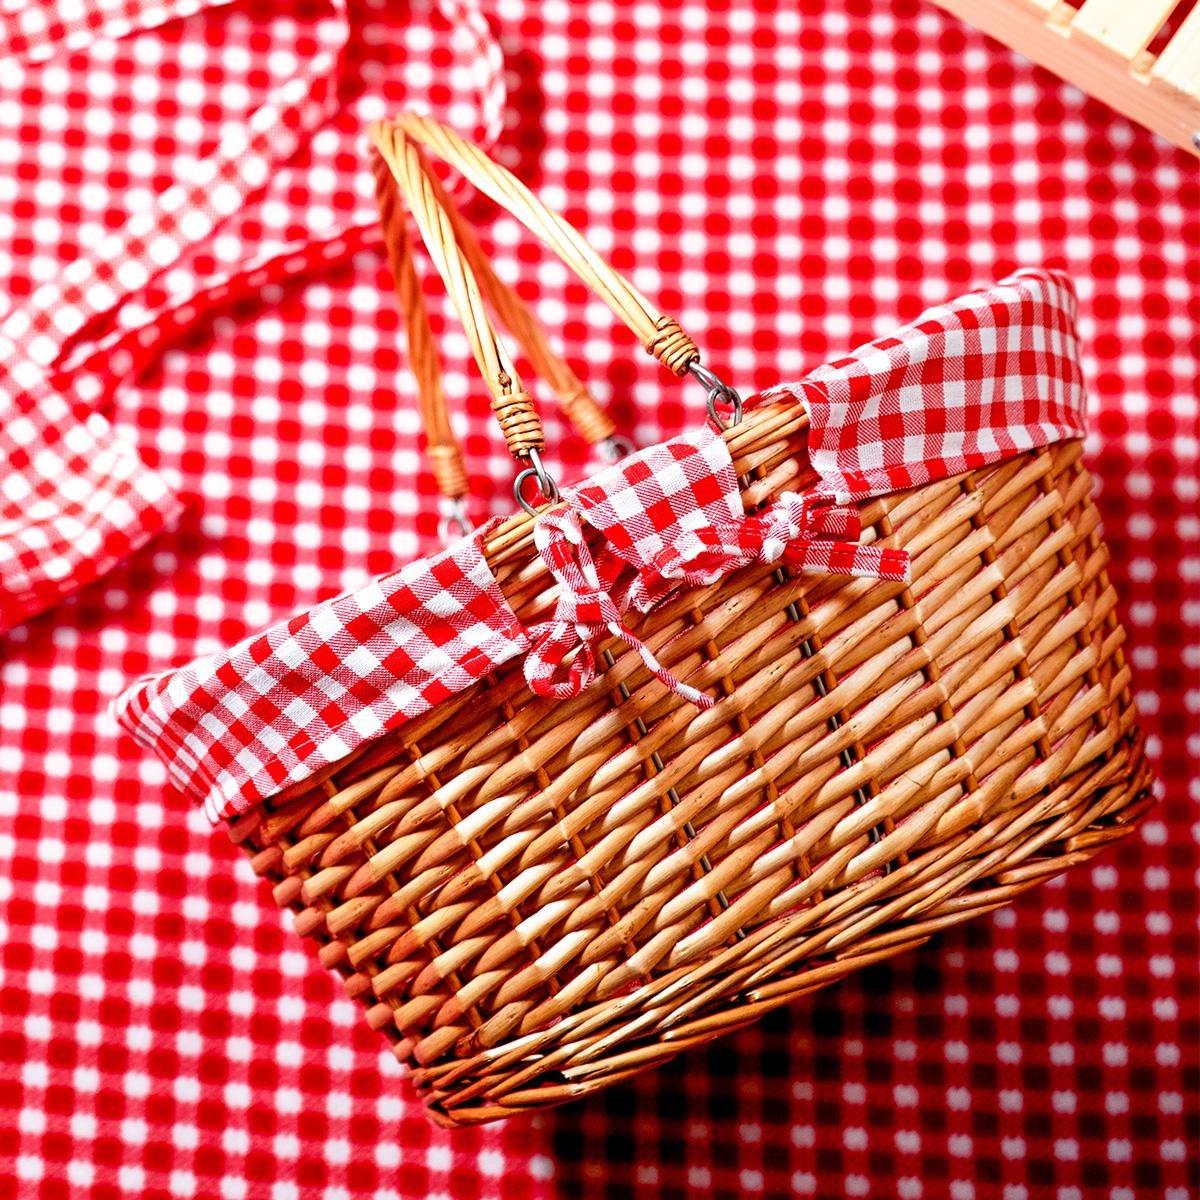 Red picnic basket